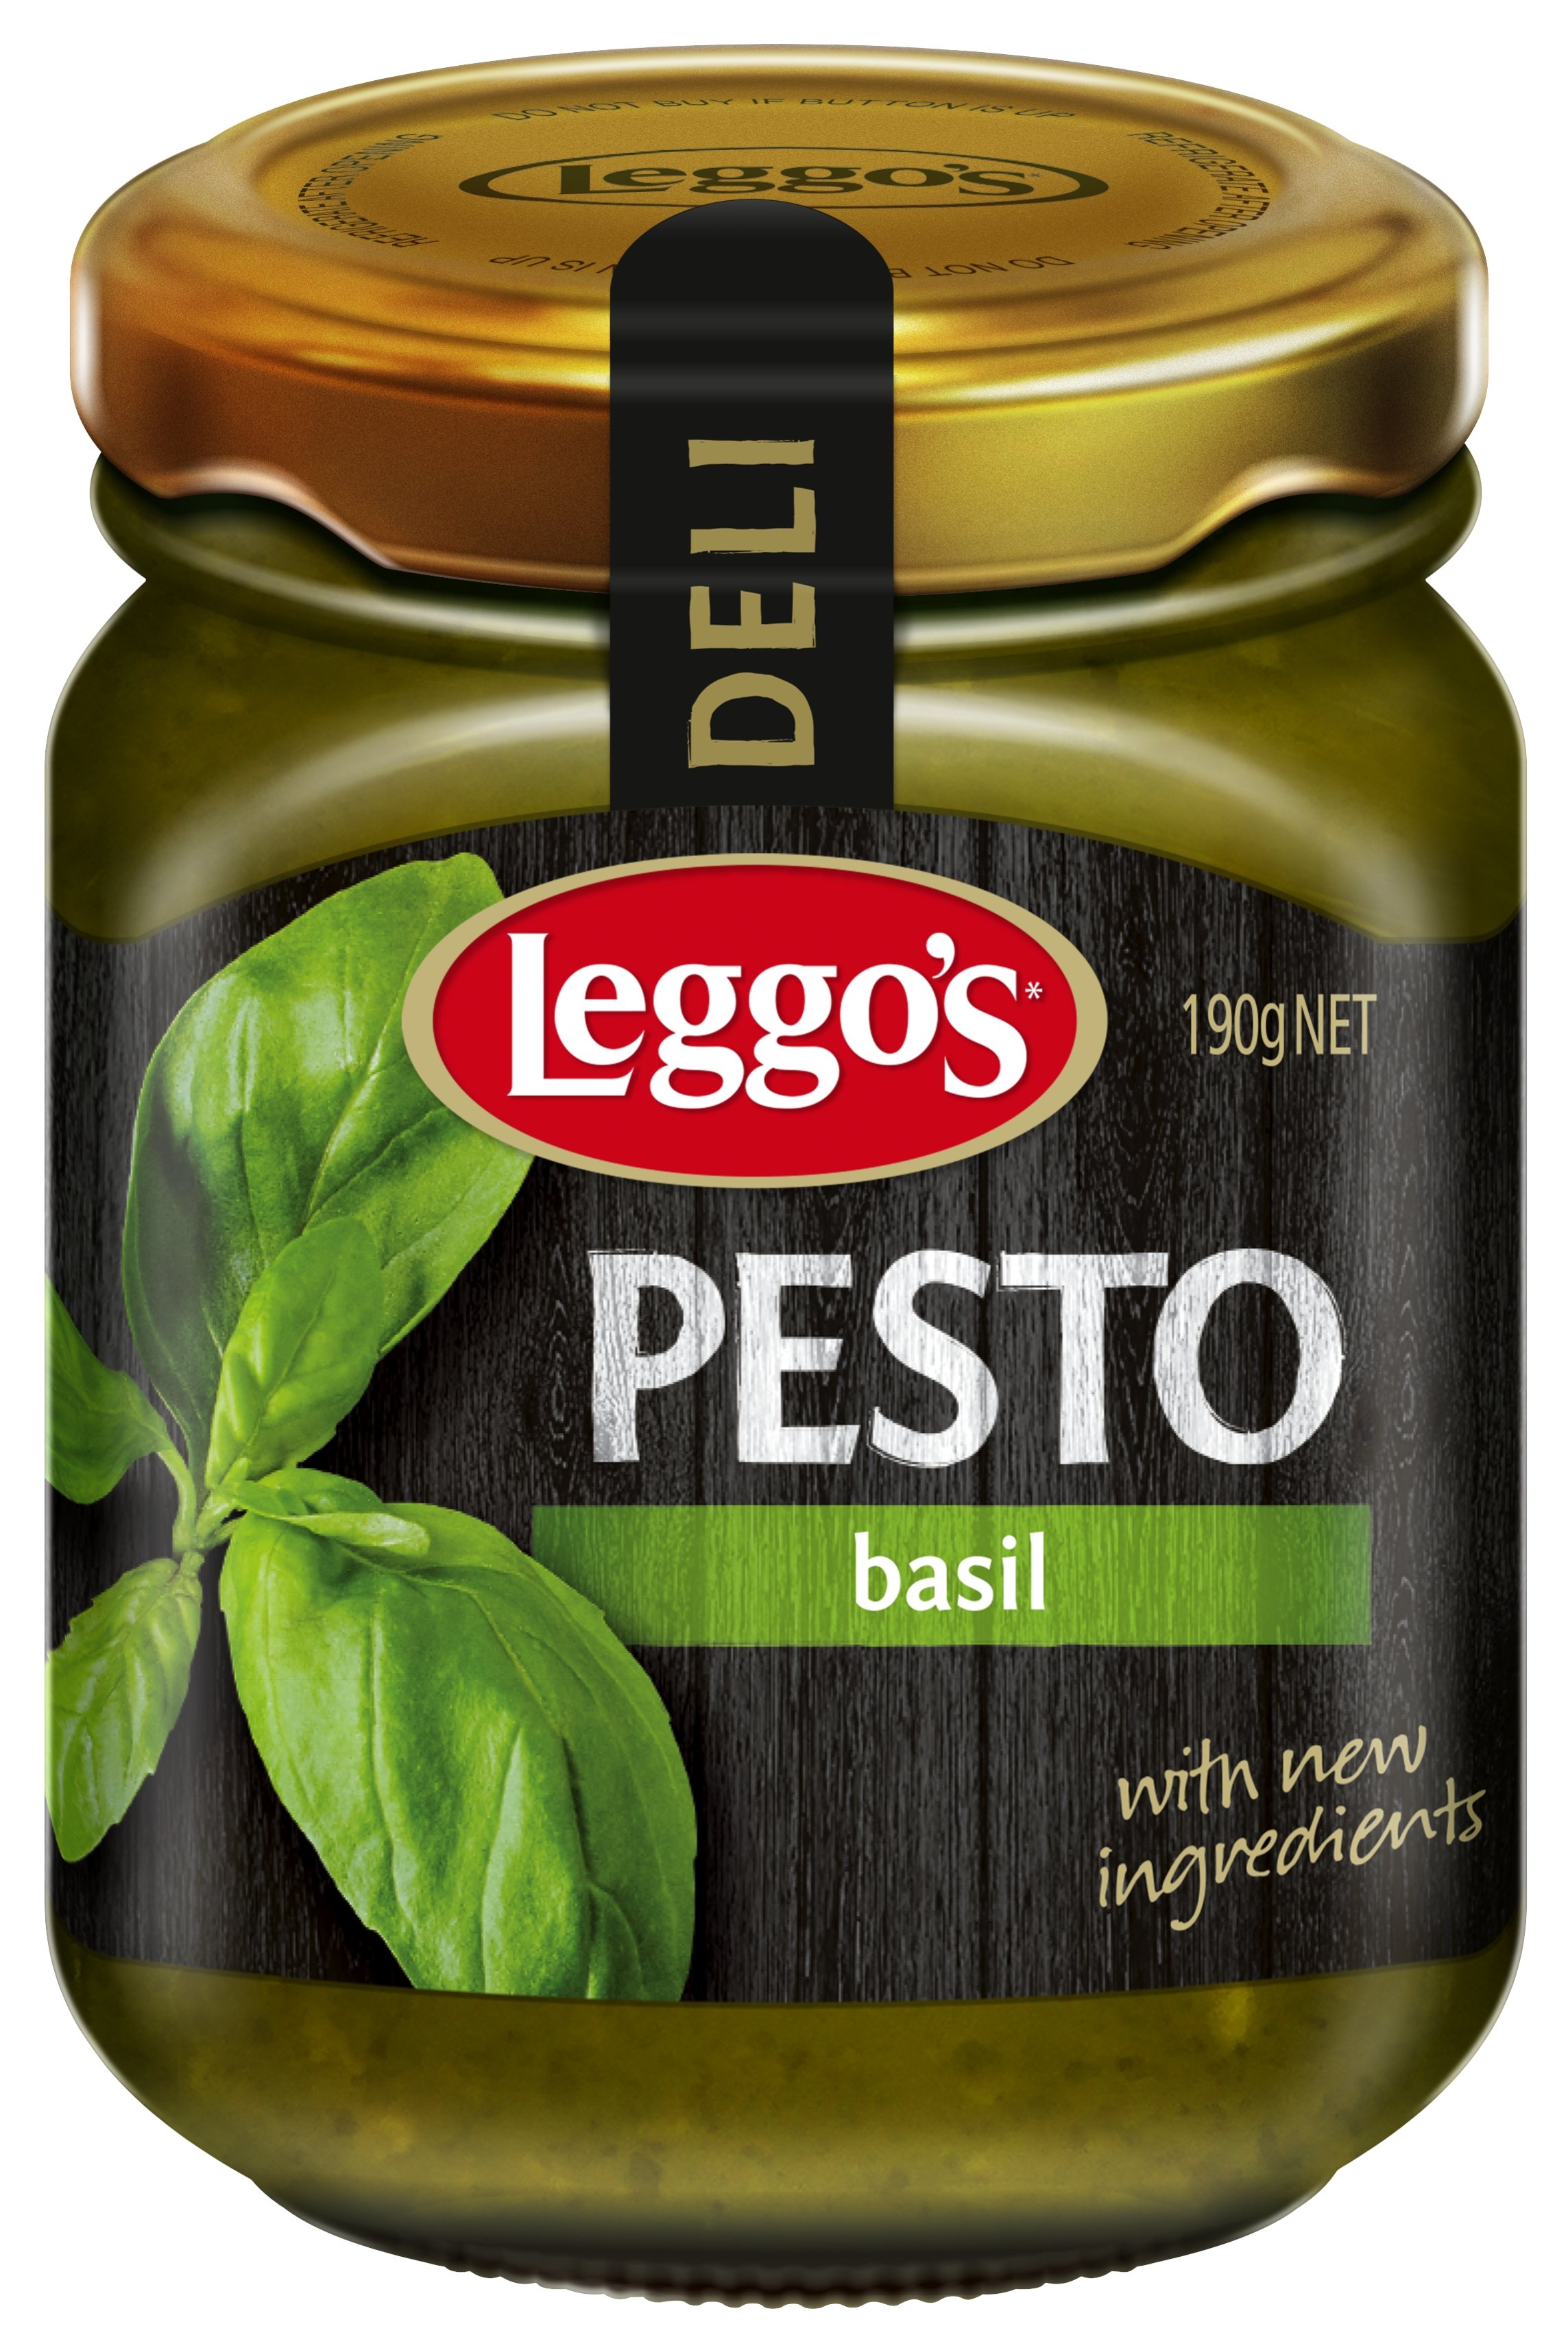 Photo of Leggos Pesto Basil in a glass jar.